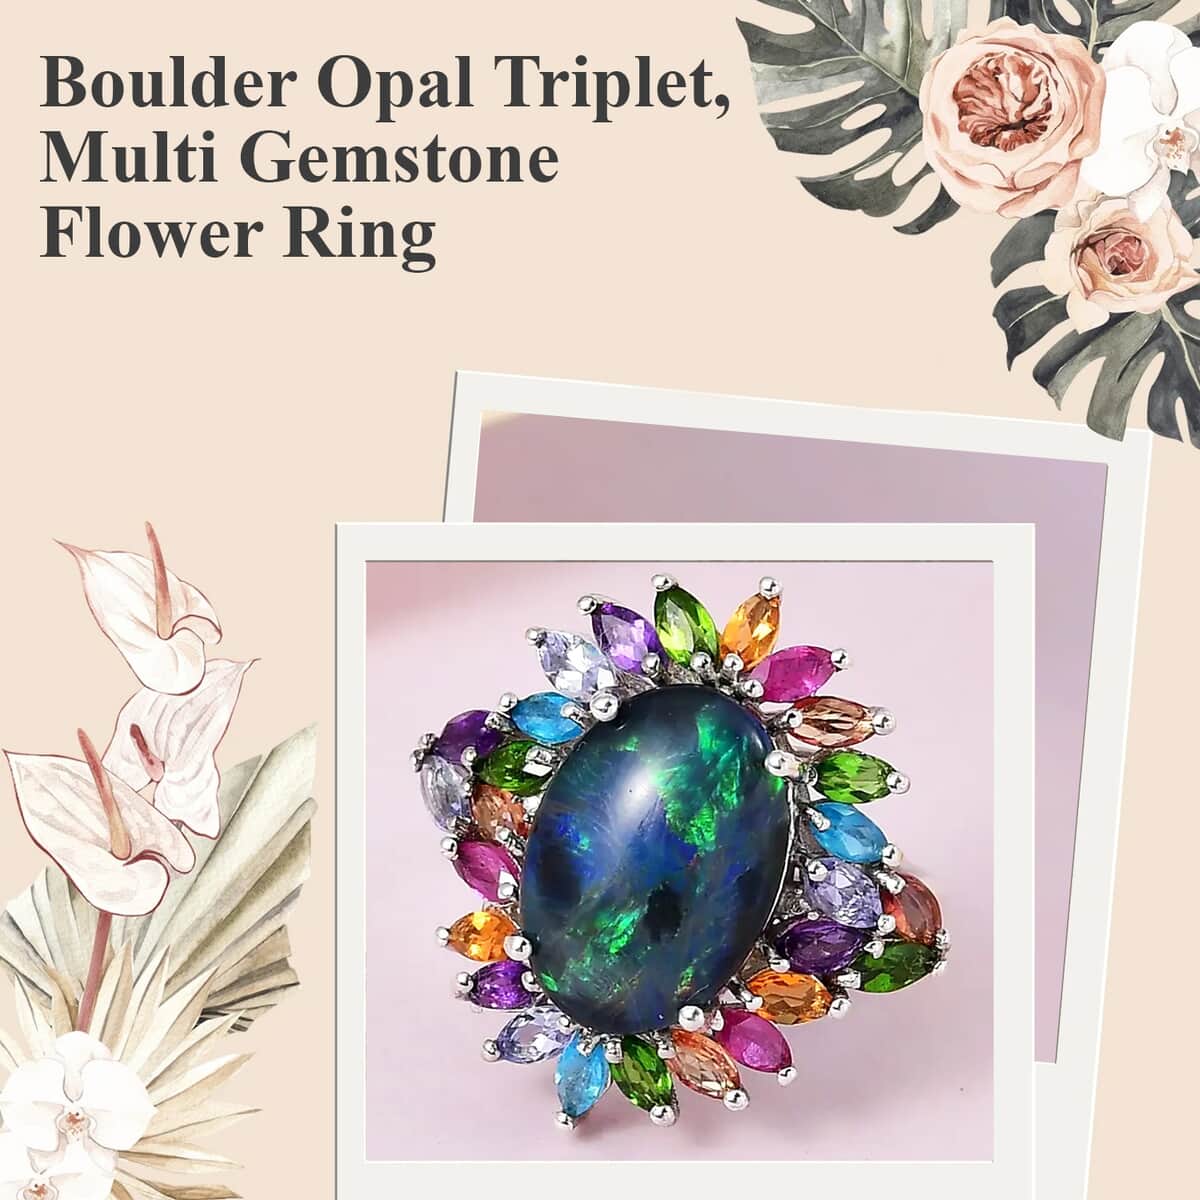 Boulder Opal Triplet, Multi Gemstone 5.65 ctw Flower Ring in Platinum Over Sterling Silver, Statement Rings For Women (Size 8.0) image number 1